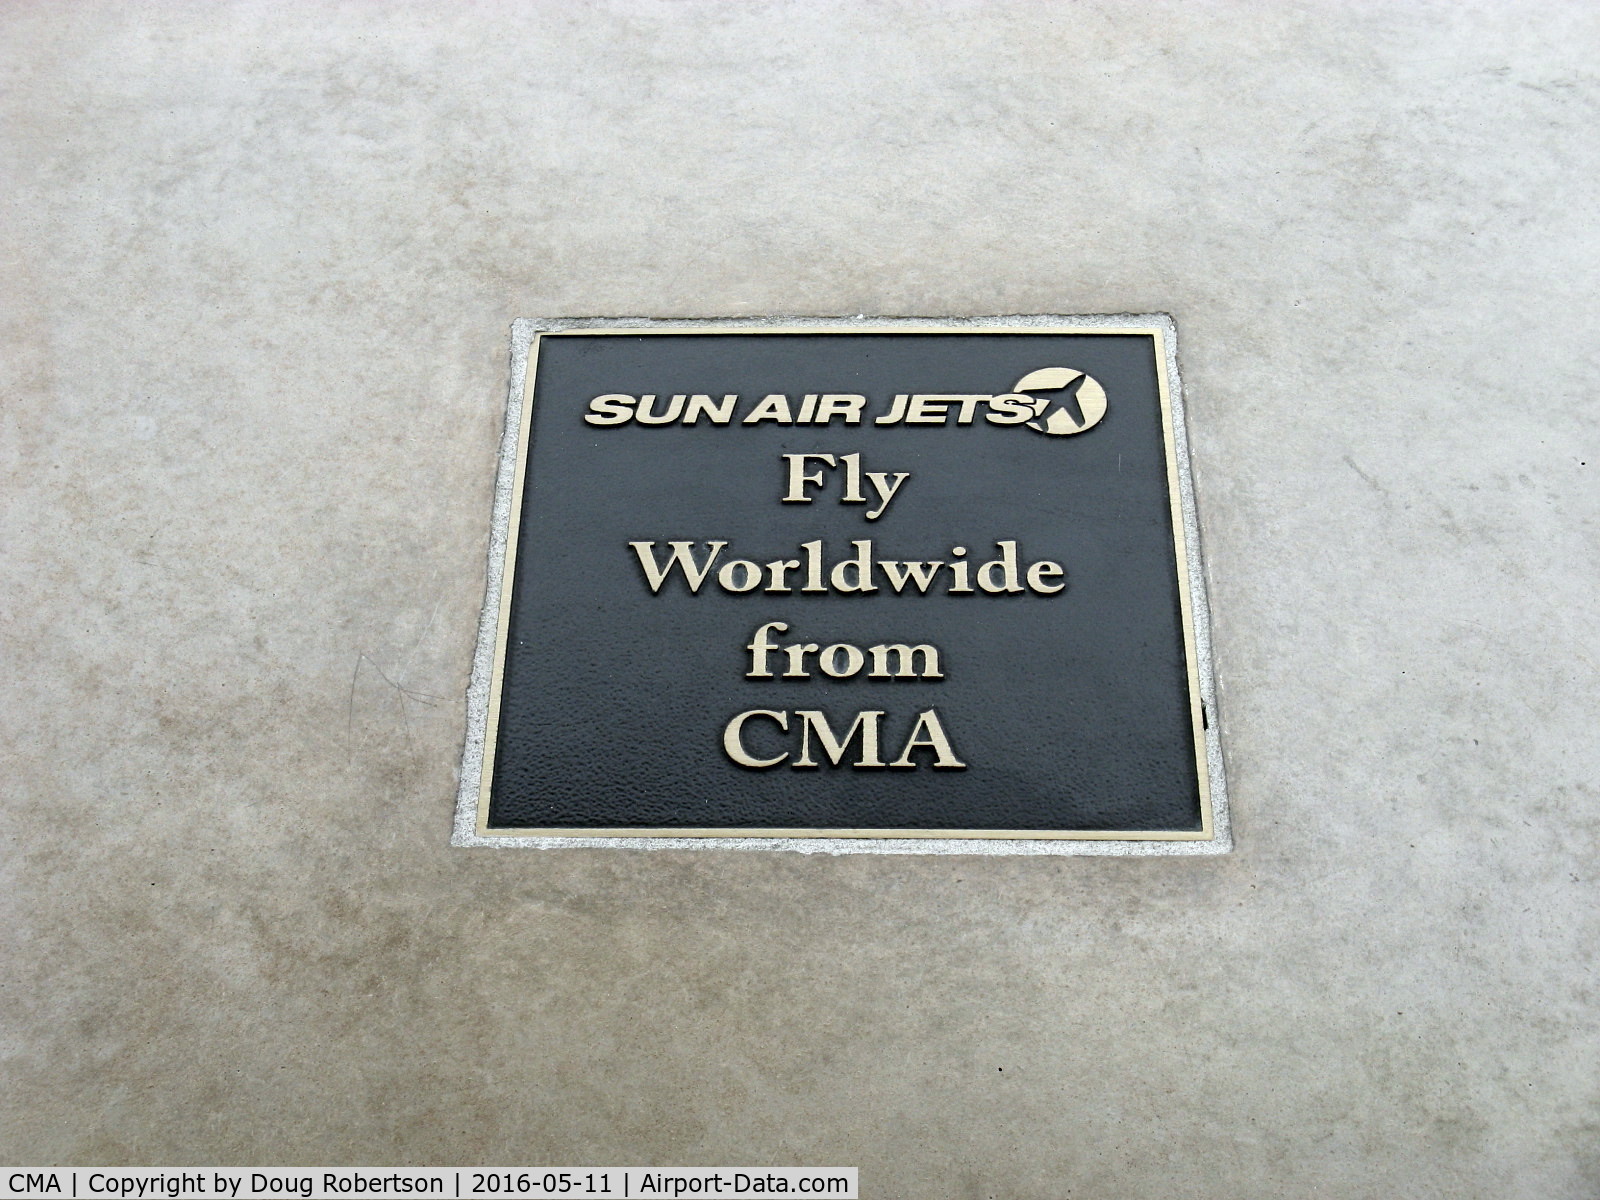 Camarillo Airport (CMA) - SUN AIR JETS Tribute Plaque at CMA Aircraft Public View Park